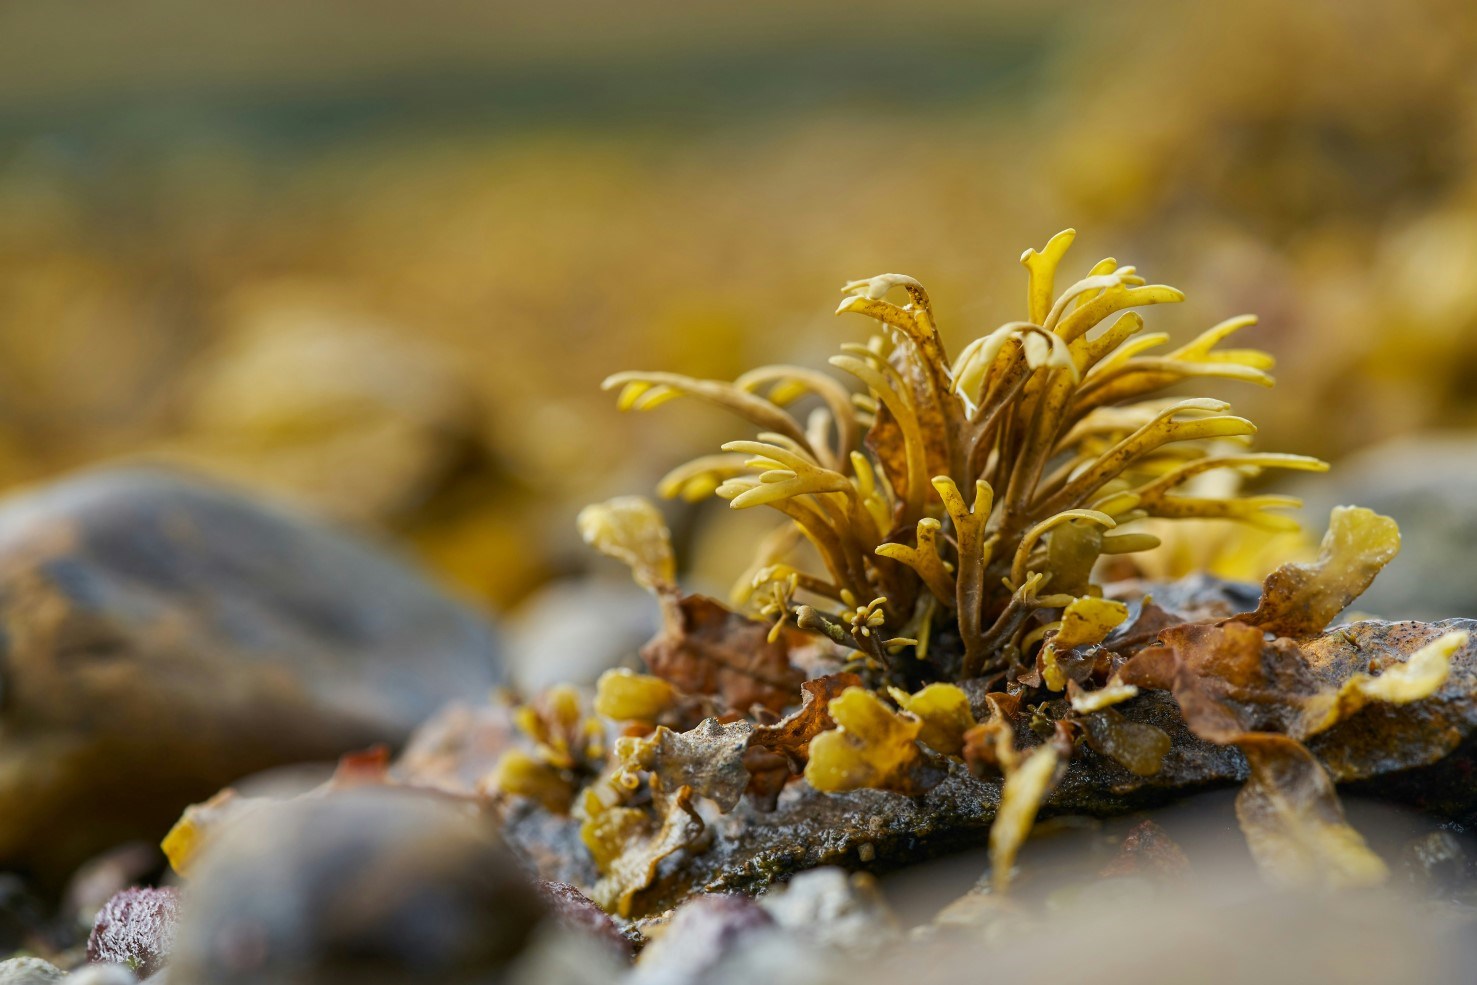 Seaweed close up